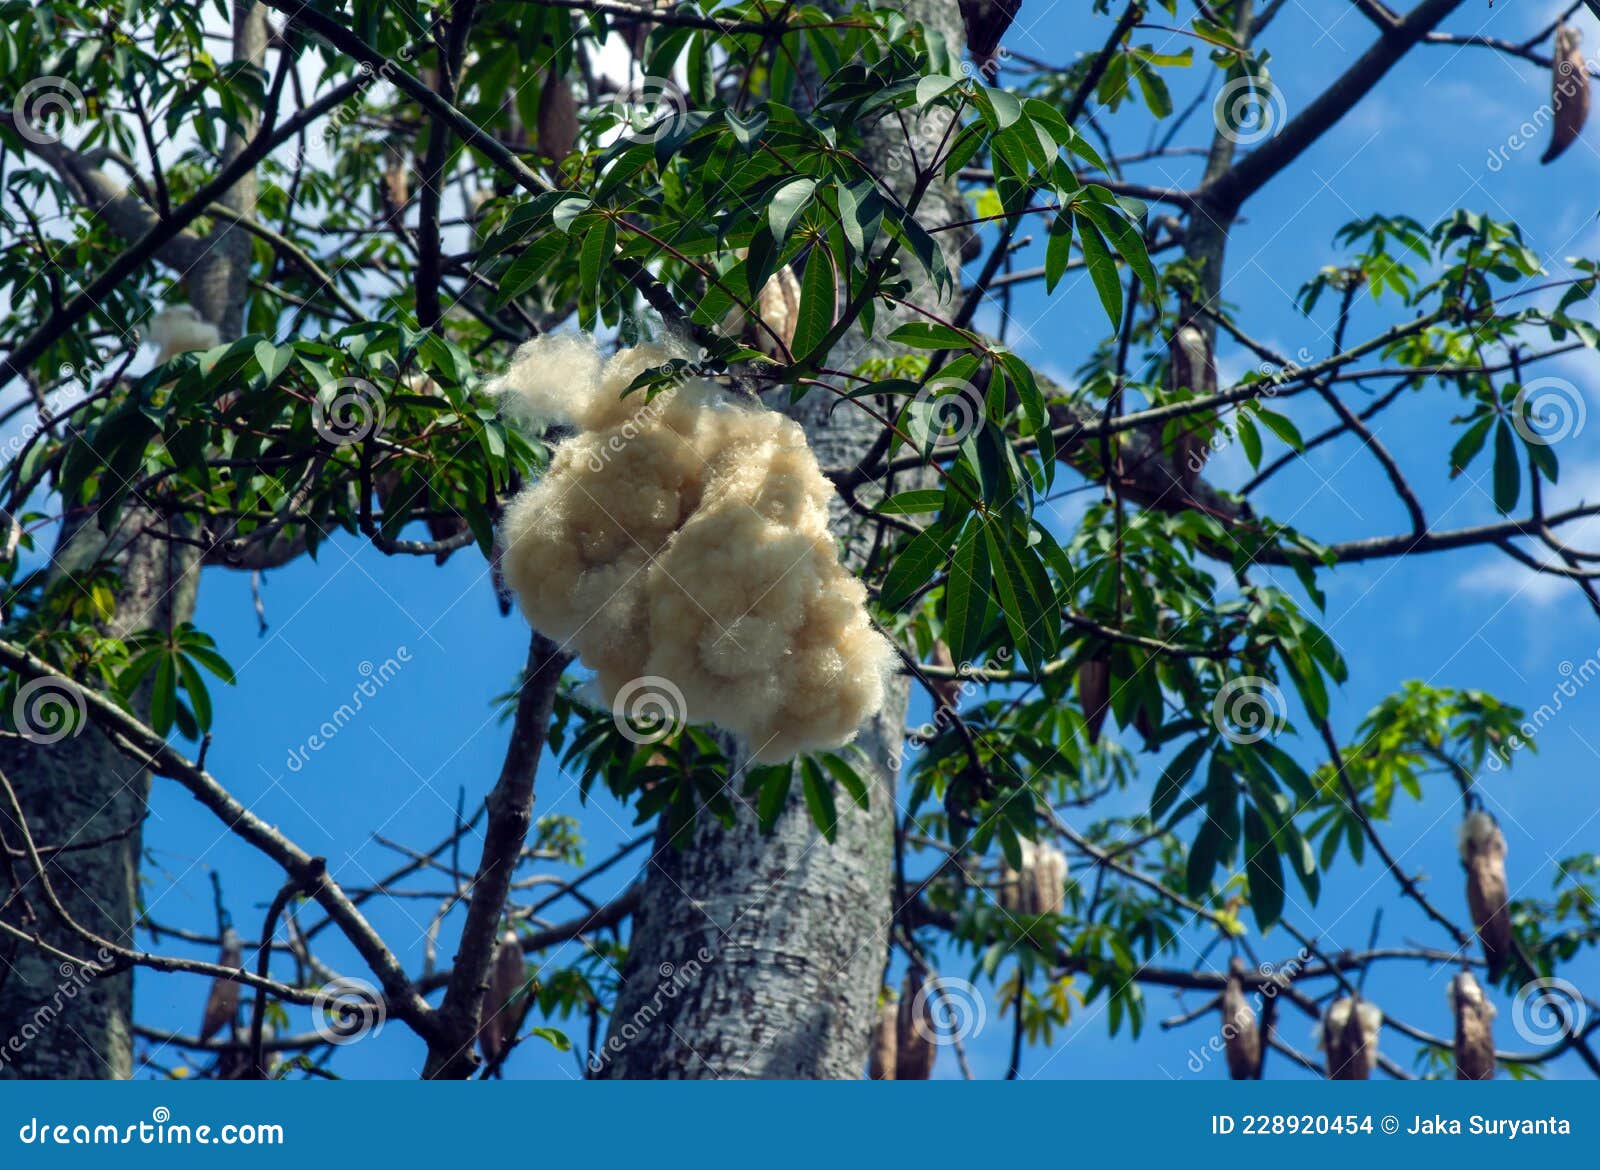 White Silk Cotton Tree Ceiba Pentandra, Kapuk Randu Javanese, the Perennial  Fruit Can Be Used To Make Mattresses and Pillows Stock Photo - Image of  mexico, green: 228920454